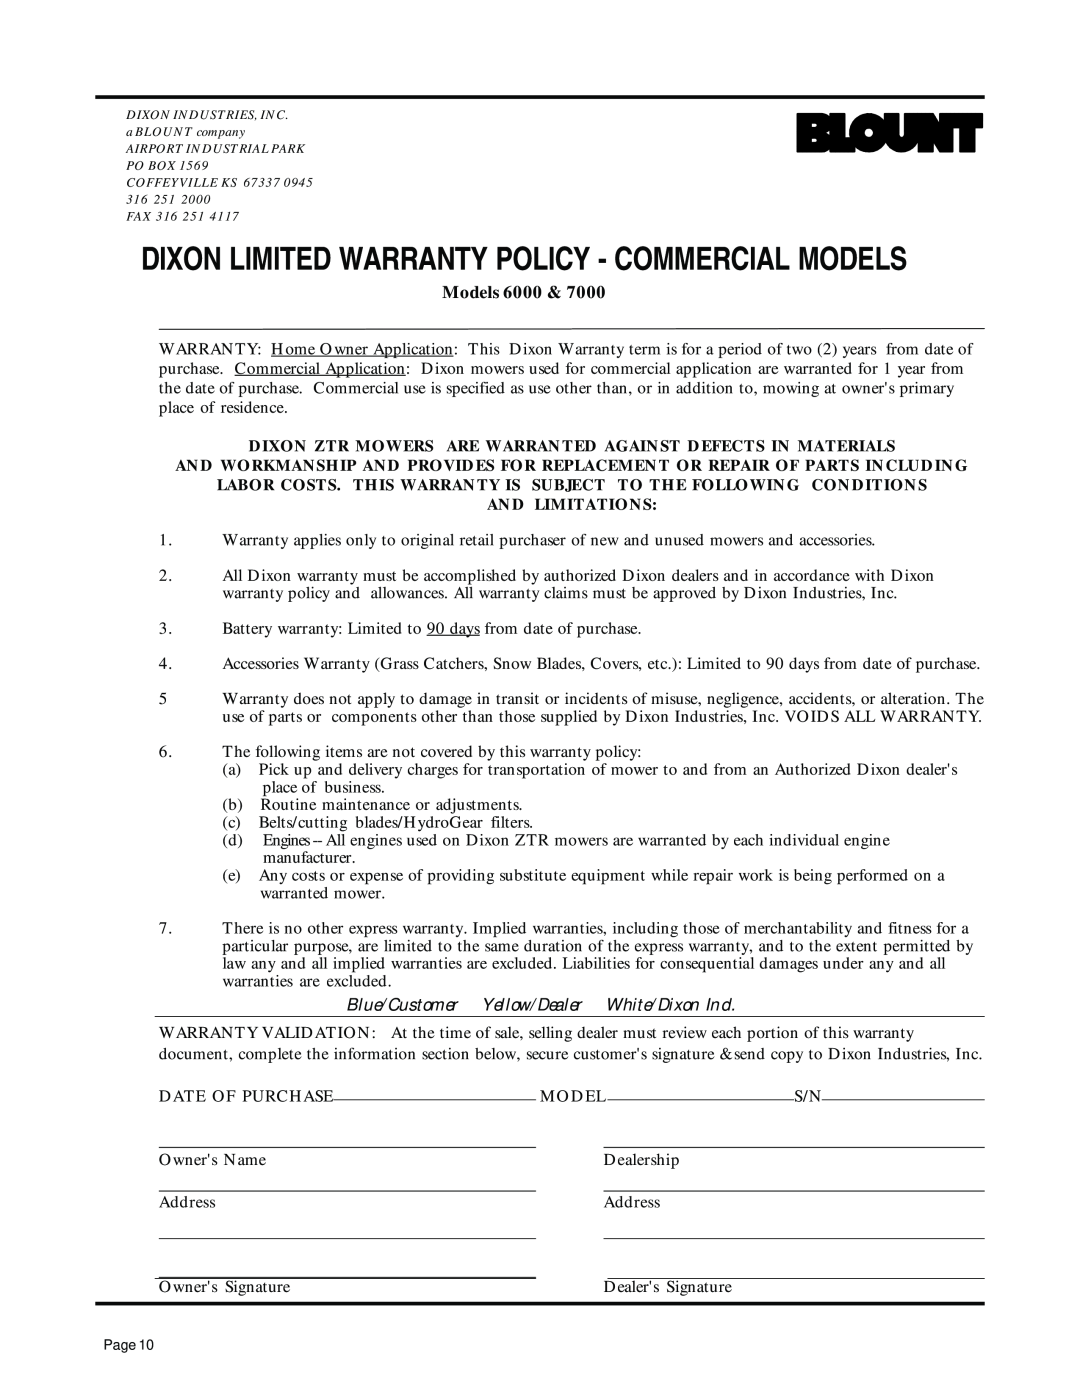 Dixon ZTR 7025, 13091-0500 manual Dixon Limited Warranty Policy - Commercial Models, And Limitations 